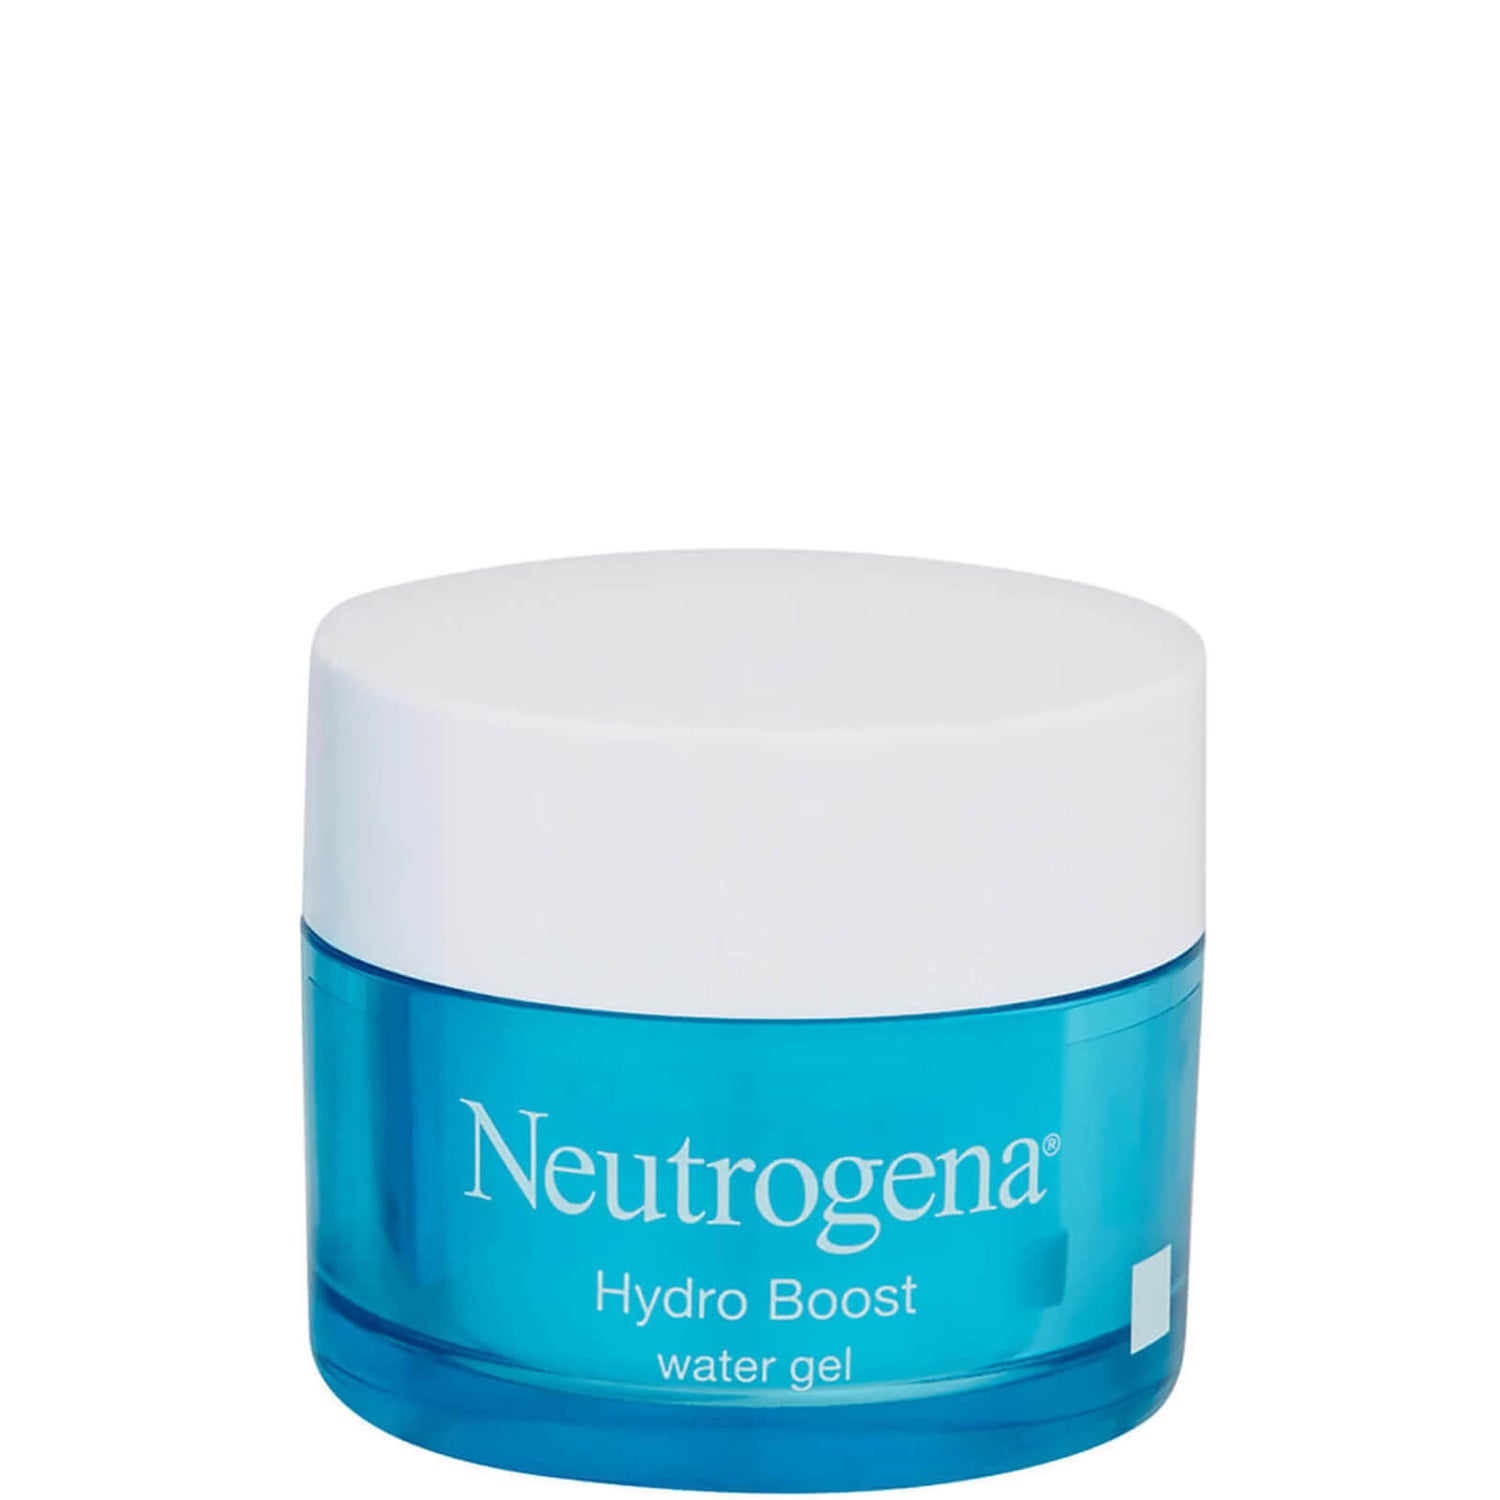 Neutrogena Hydro Boost Water Gel Moisturiser with Hyaluronic Acid for Dry Skin 50ml |